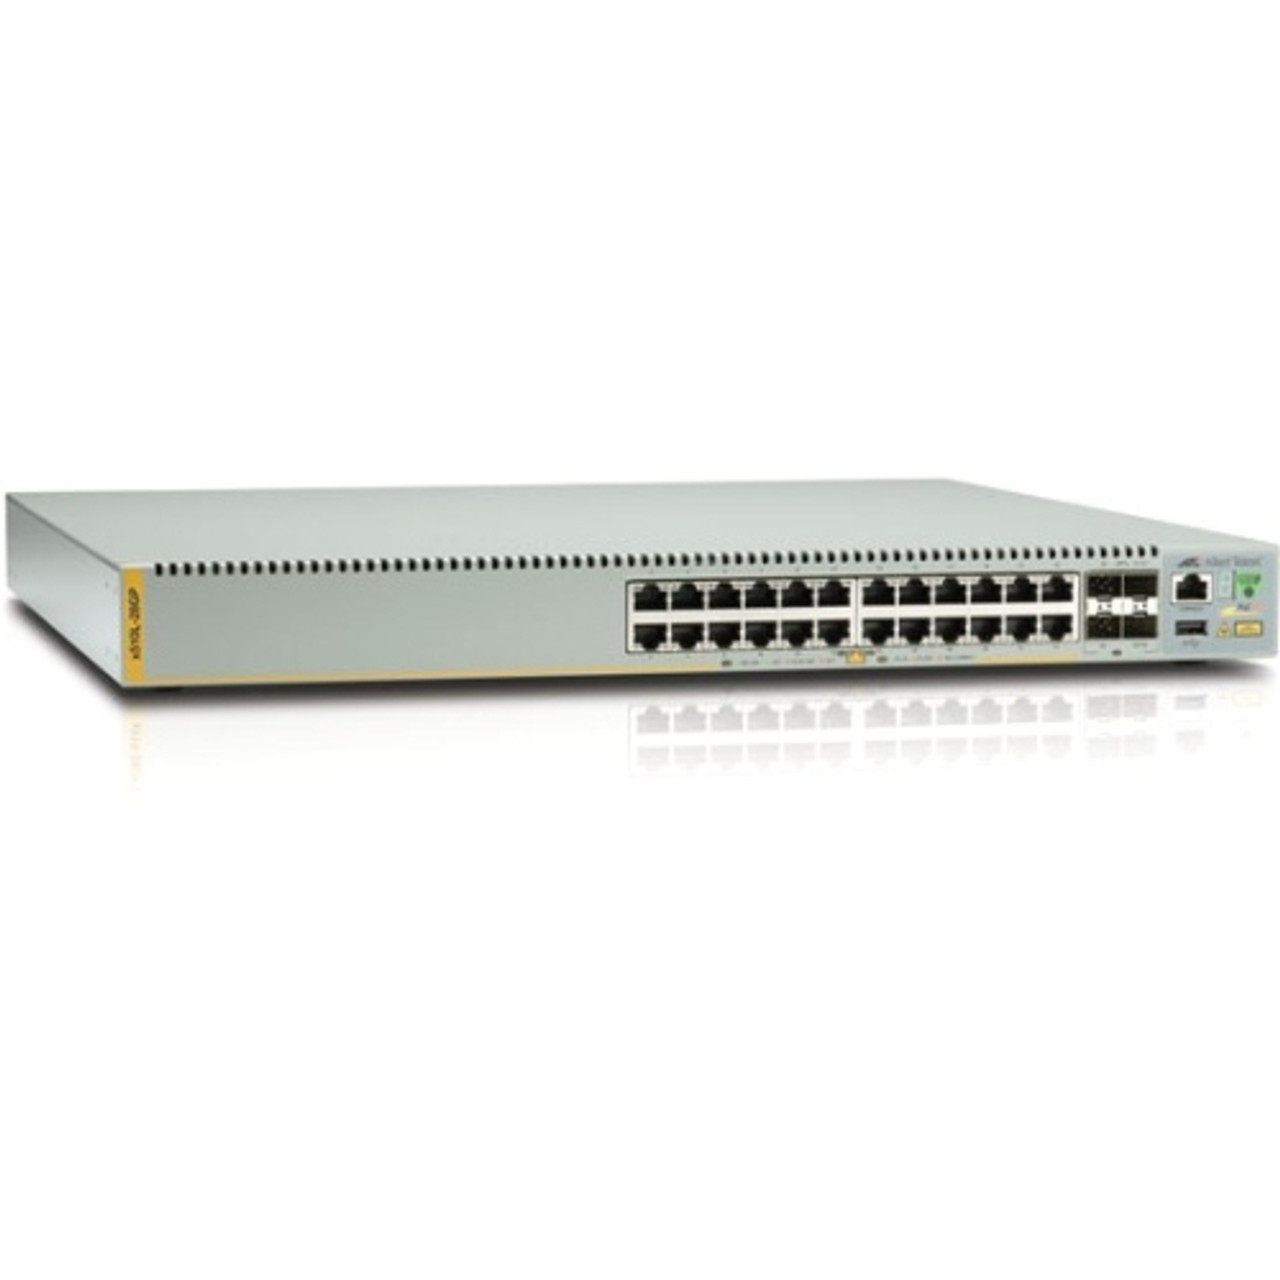 AT-X510L-28GP-90 Allied Telesis 24-Ports 10/100/1000Base-T Poe+ Switch with 4x 1 Gigabit SFP Uplink Ports (Refurbished)